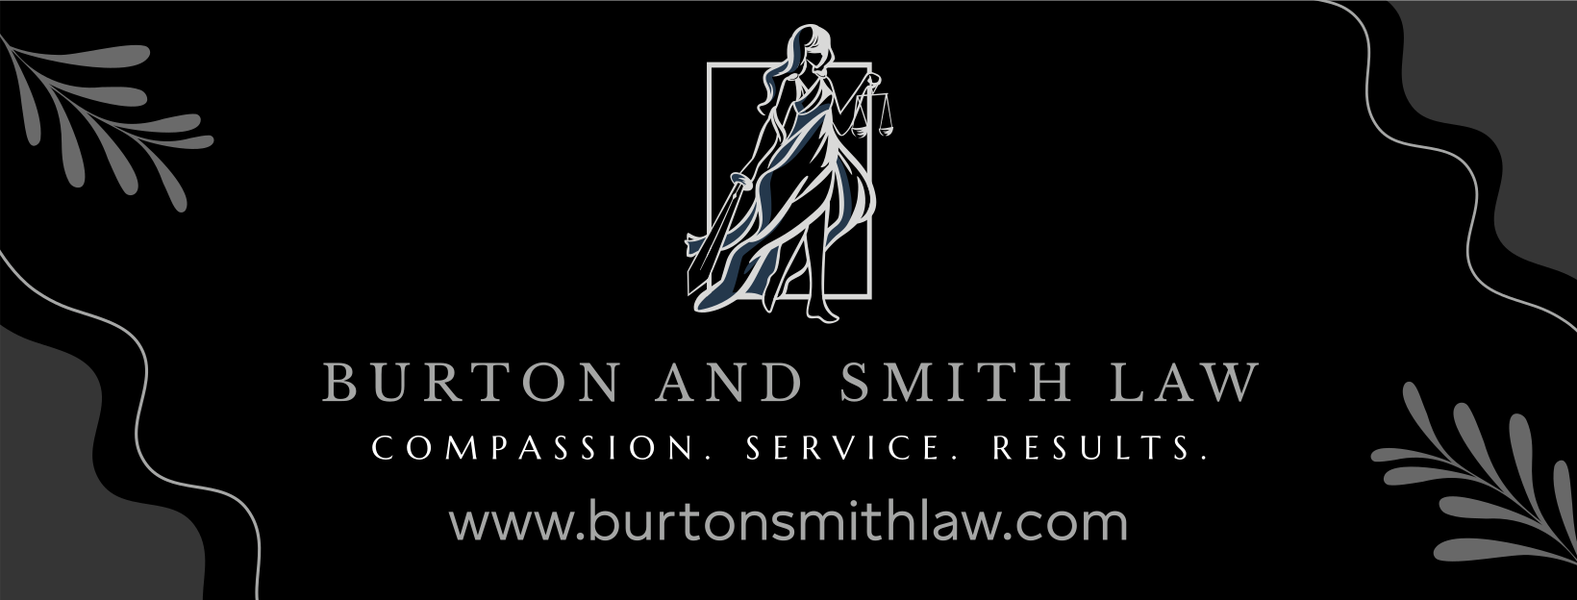 Burton and Smith Law